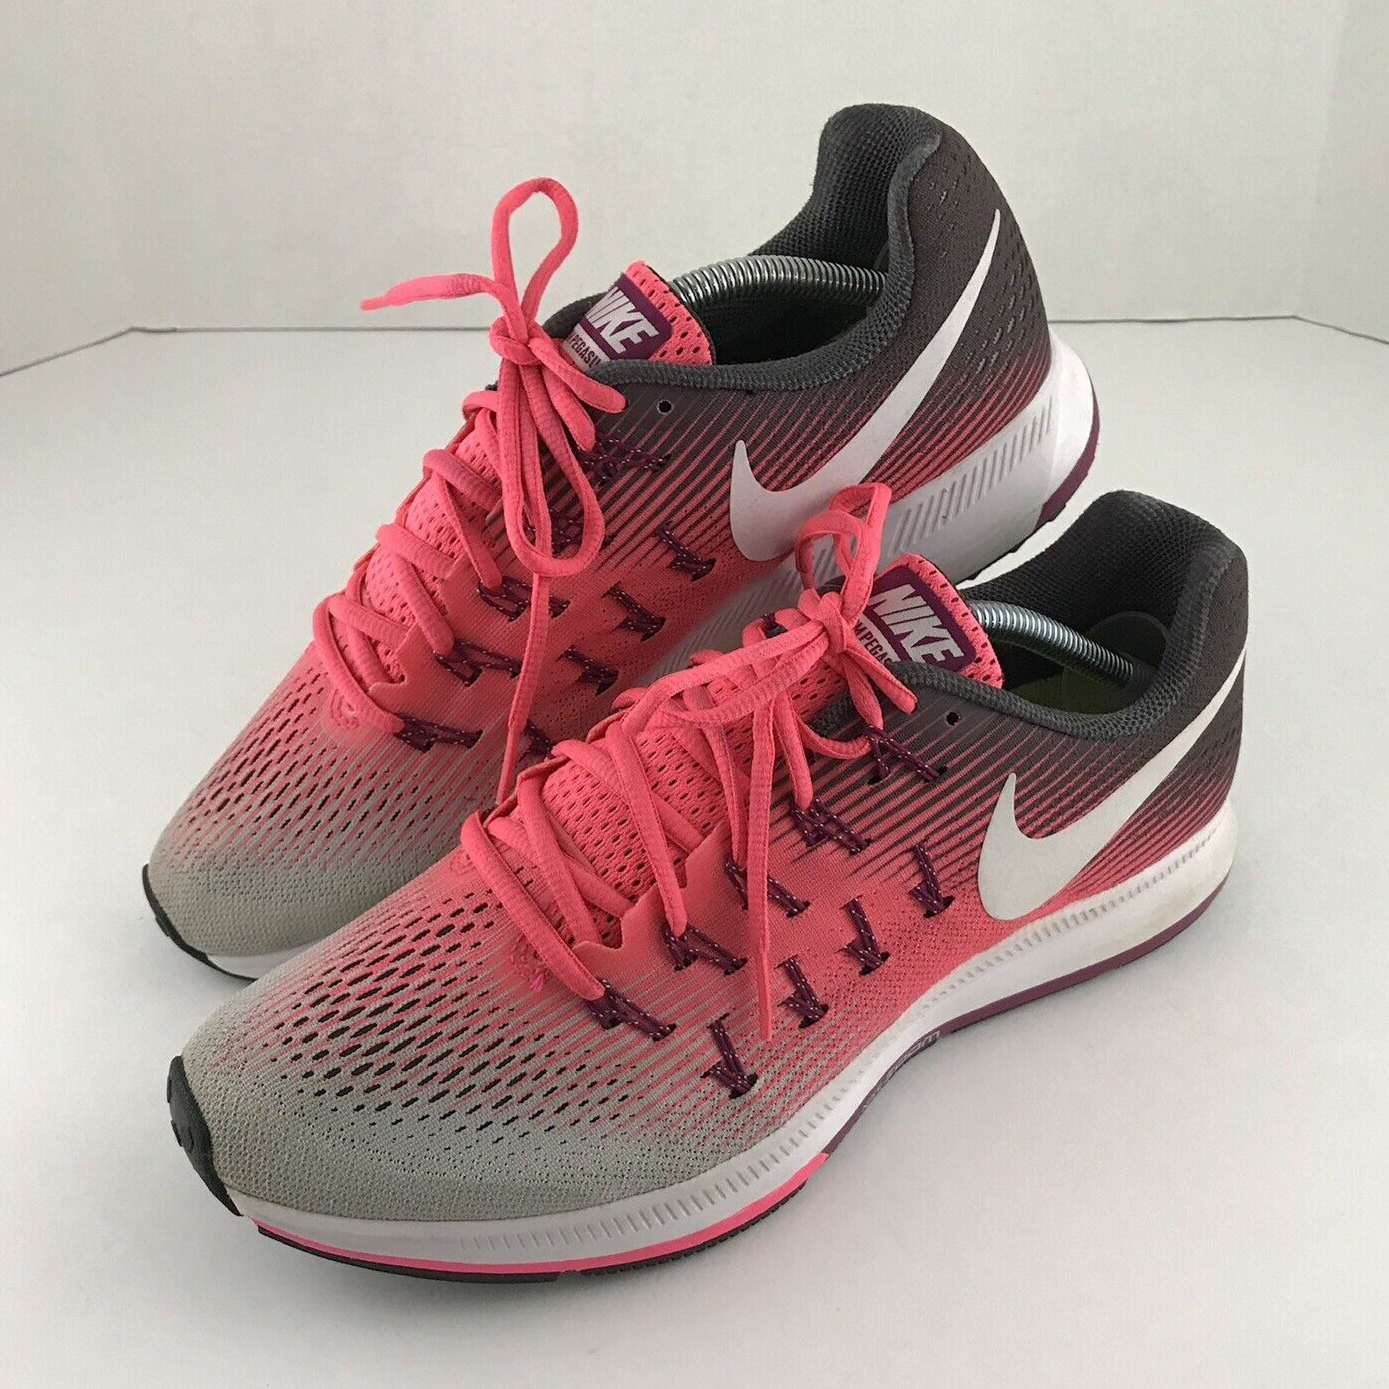 Nike Womens Air Zoom Pegasus 33 Running Hot Pink Grey Size US 11.5 |